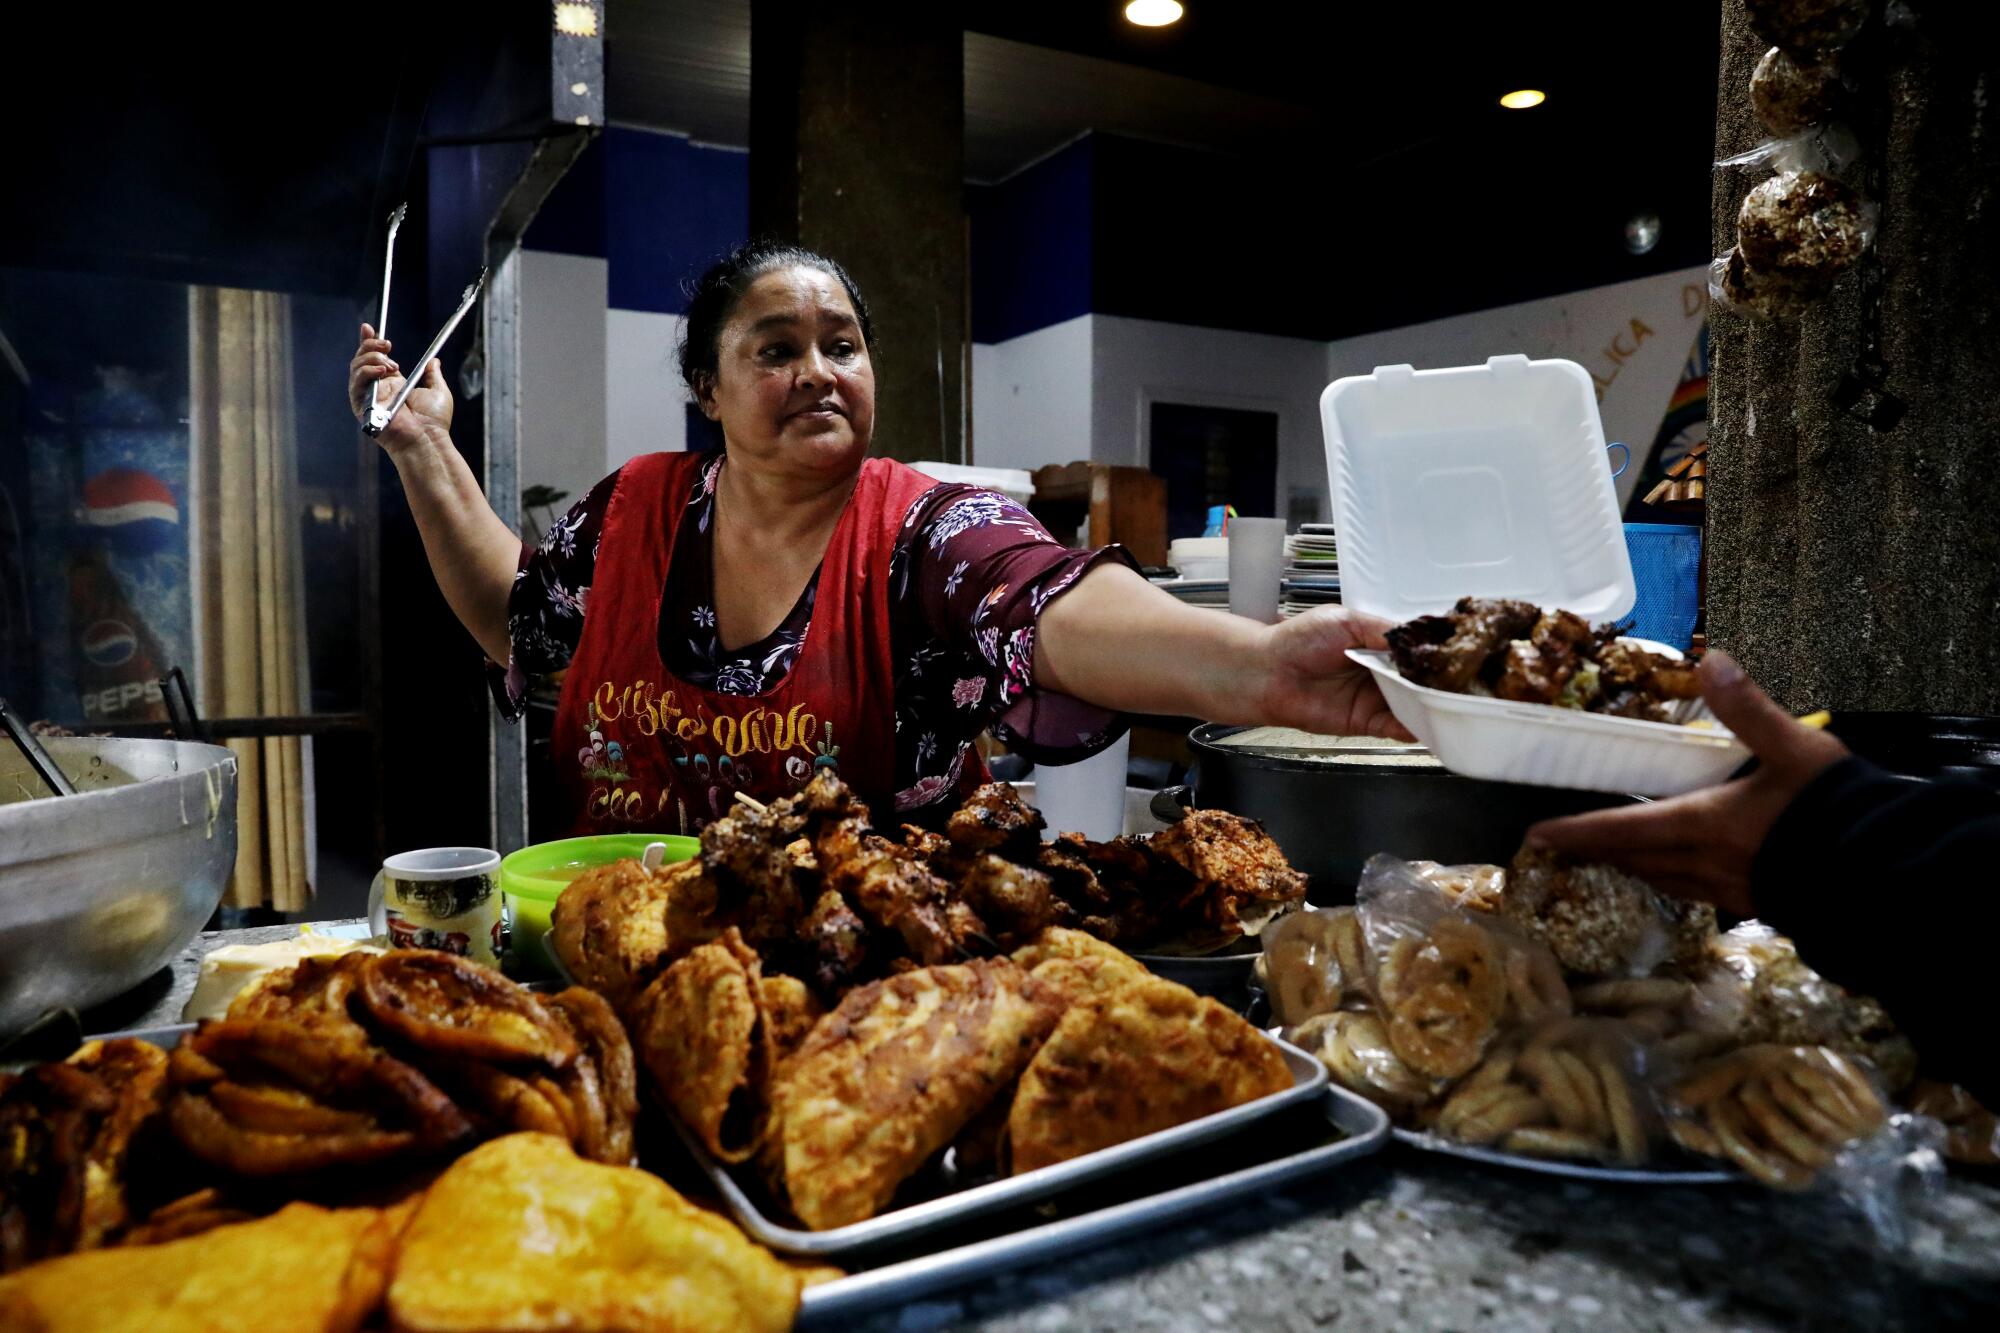 Woman serving food in restaurant